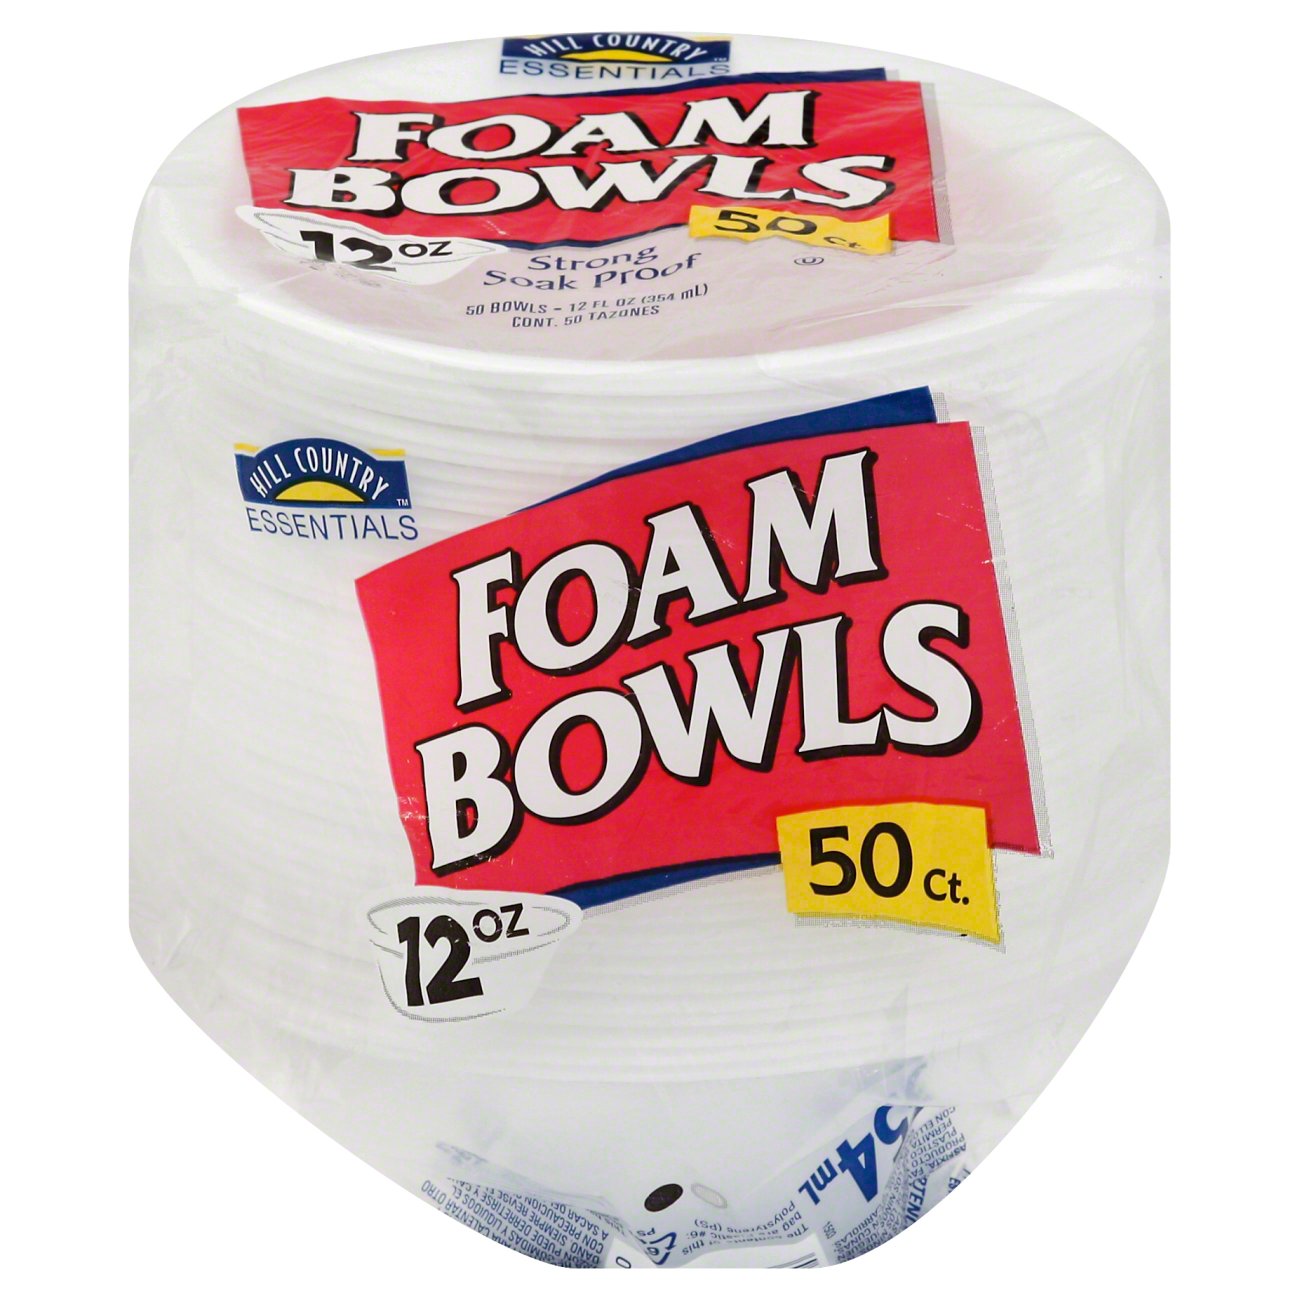 Hill Country Essentials 12 oz Foam Bowls